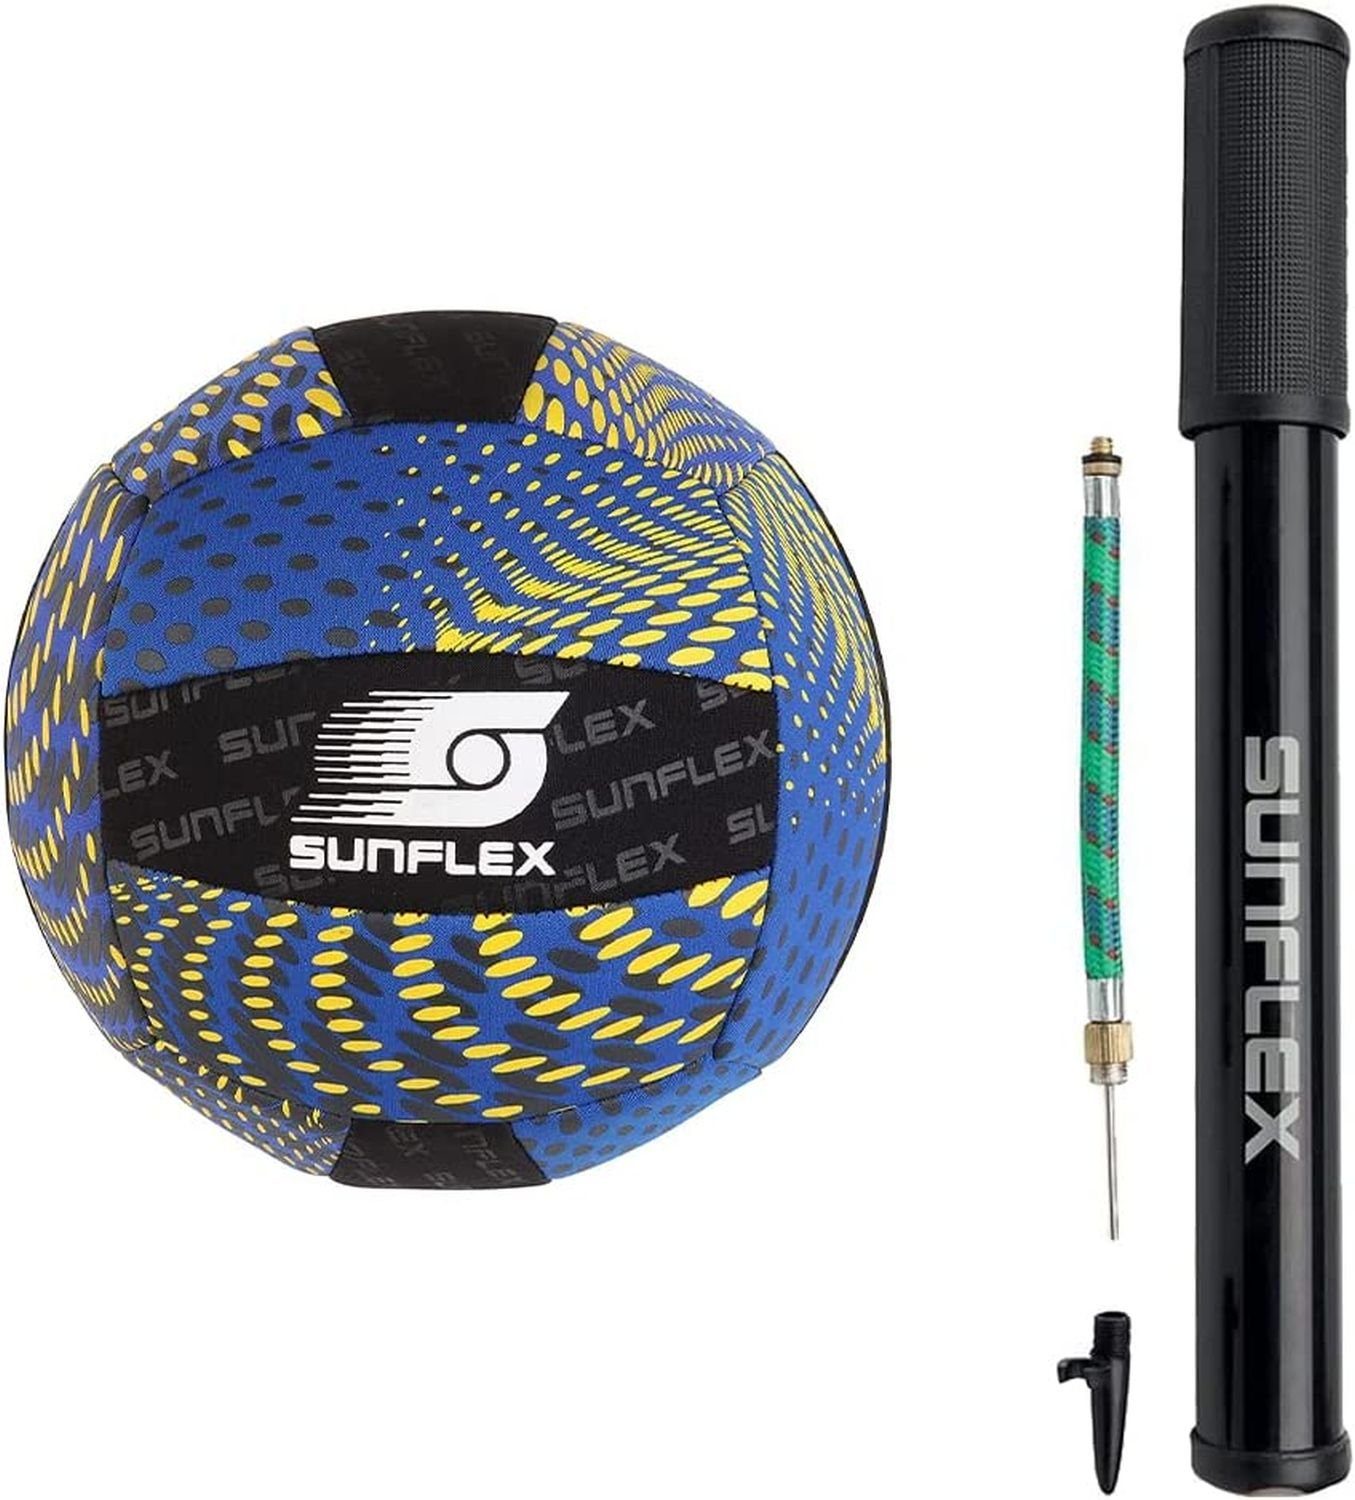 Ball Pumpe inkl. Größe Sunflex Beachvolleyball 5 blau Splash